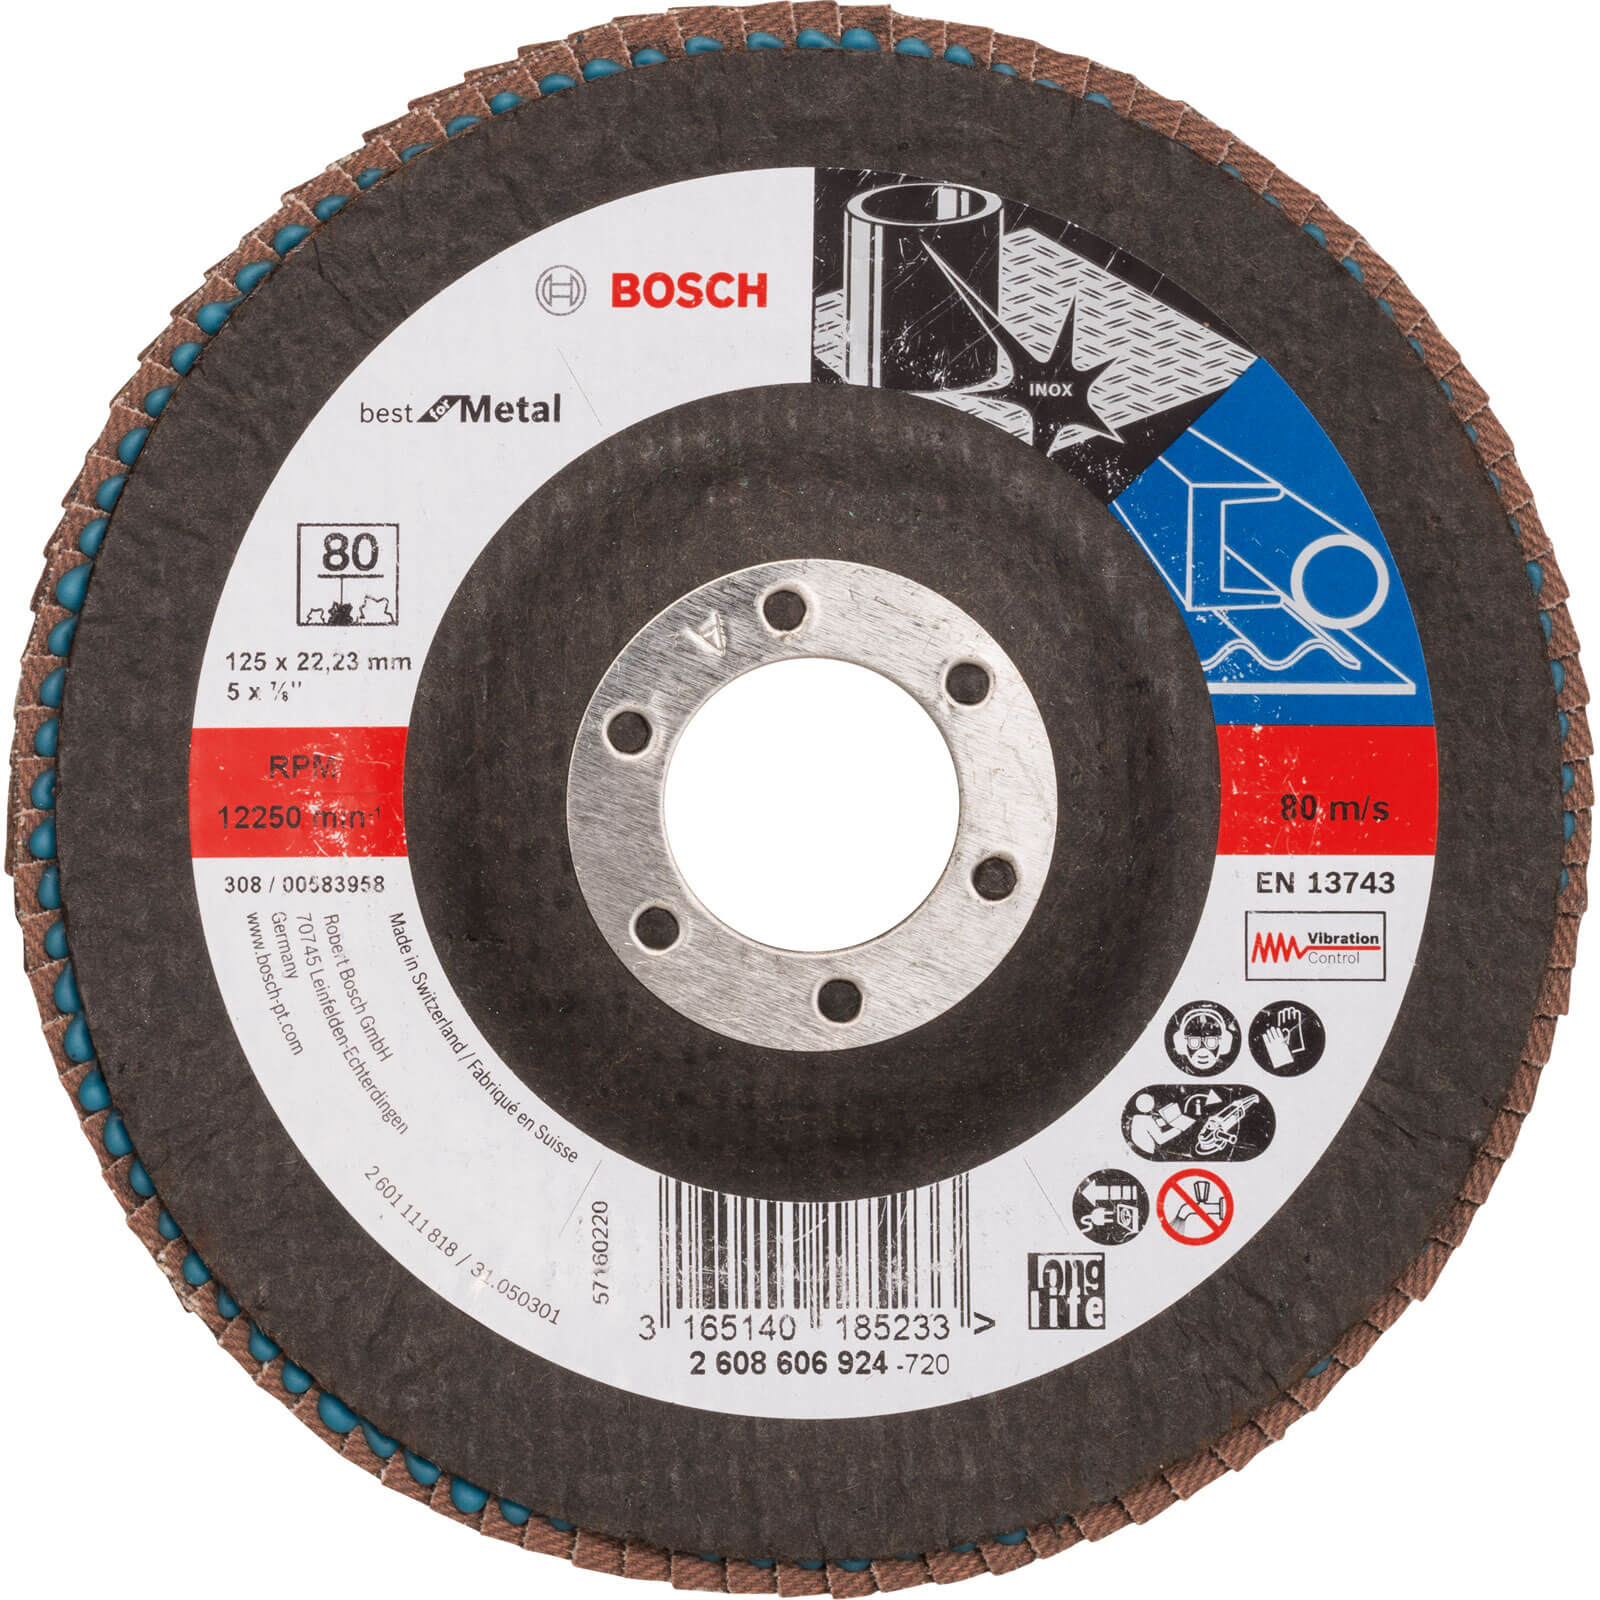 Image of Bosch Zirconium Abrasive Flap Disc 125mm 80g